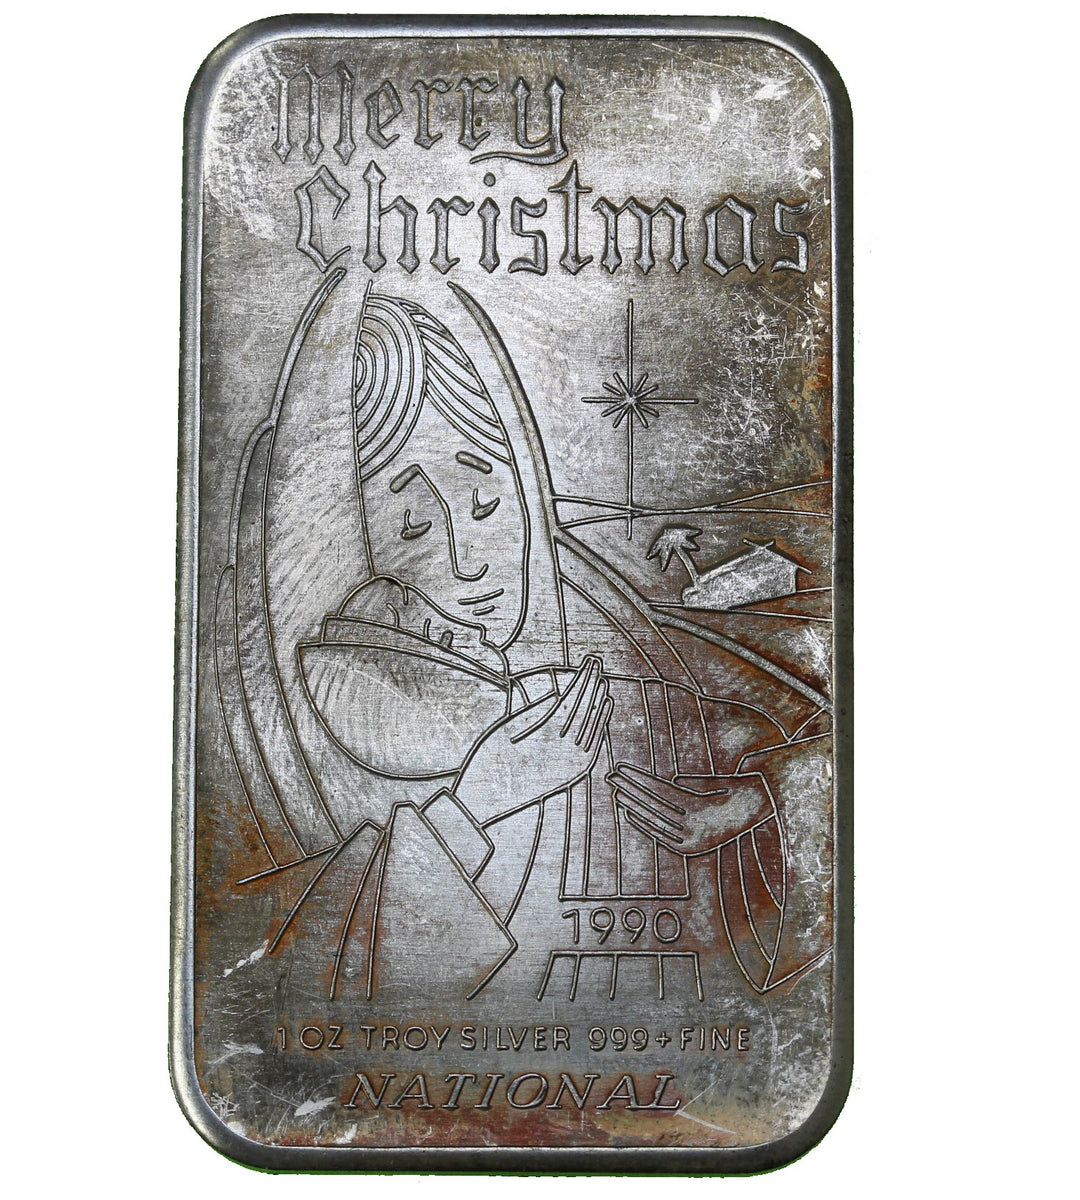 1 oz - National Mint - Merry Christmas 1990 - Fine Silver Bar – MK